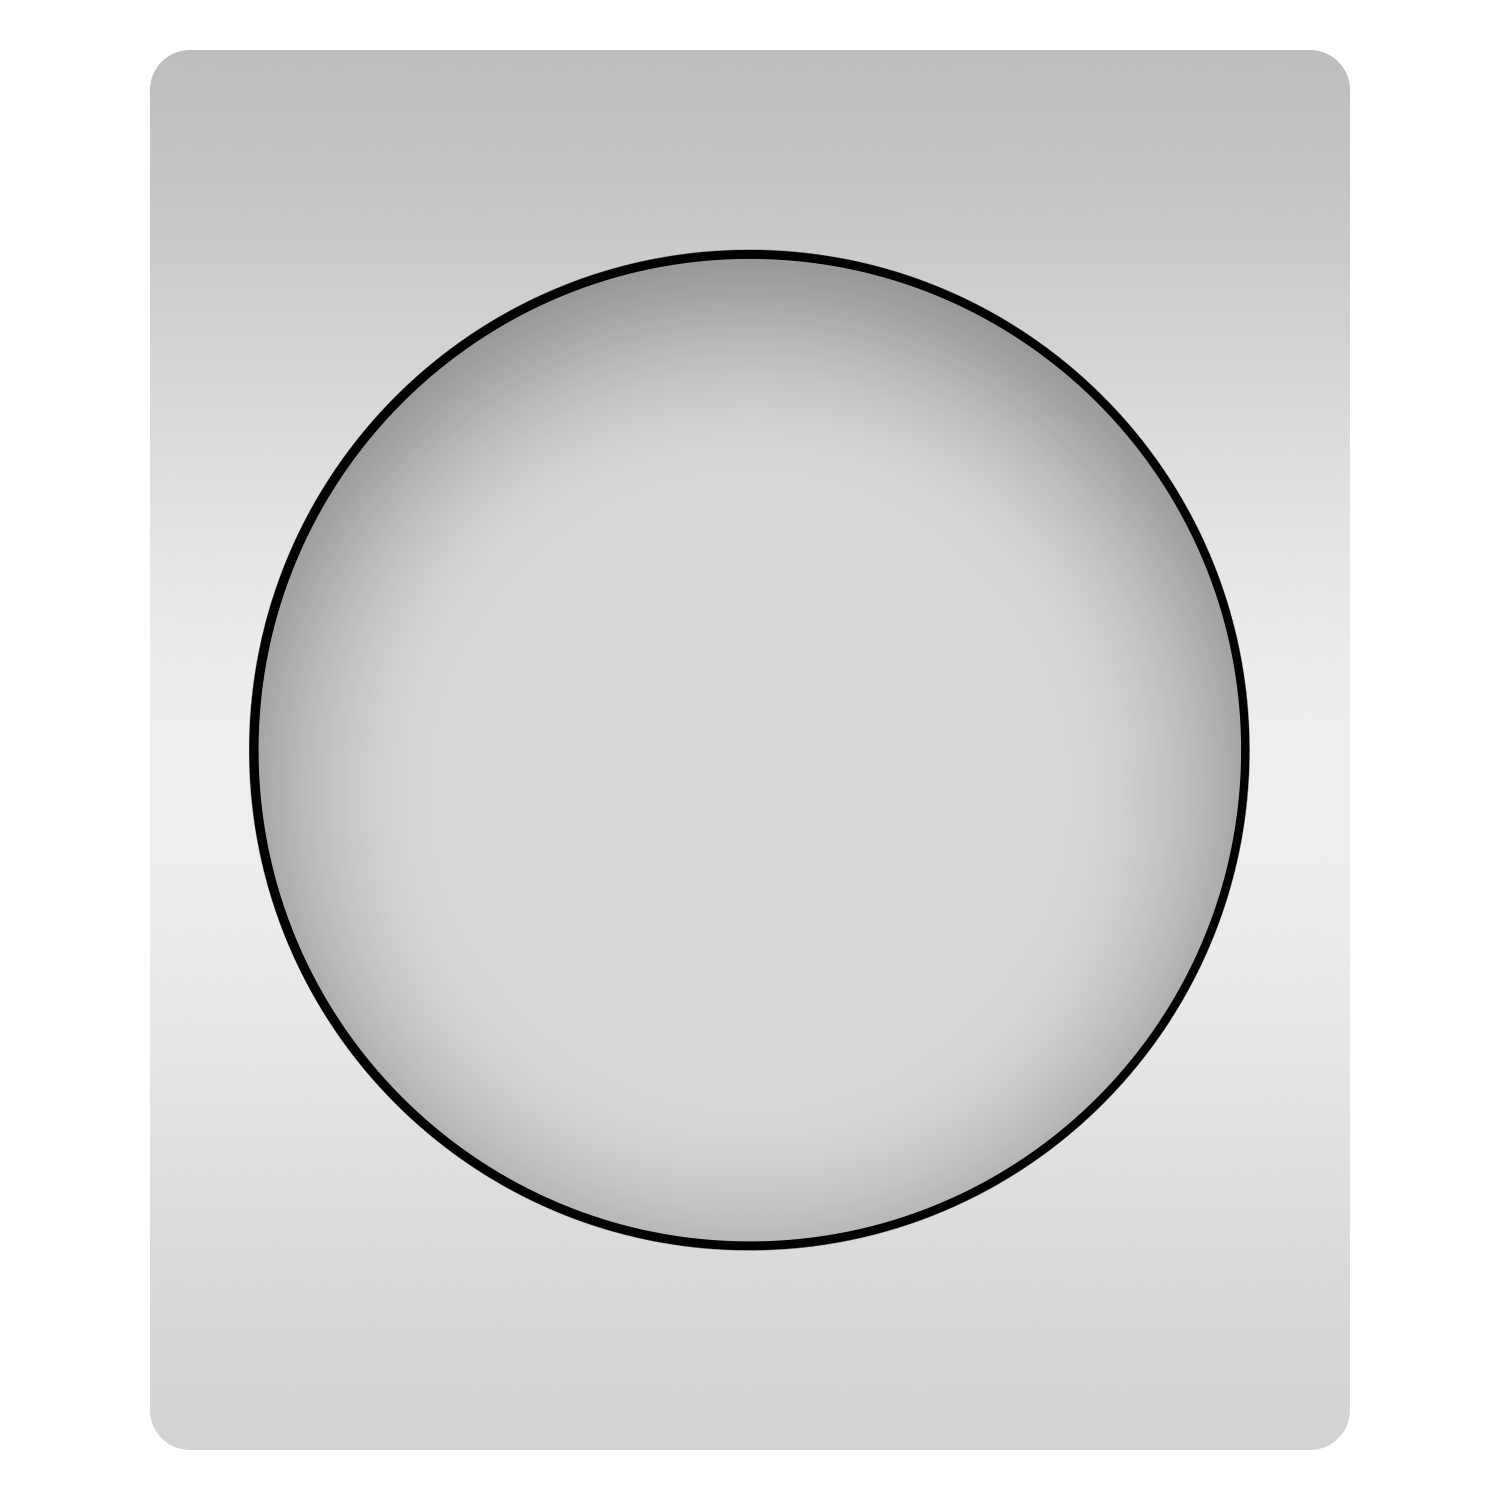 Влагостойкое круглое зеркало Wellsee 7 Rays' Spectrum 172200080, 90 см